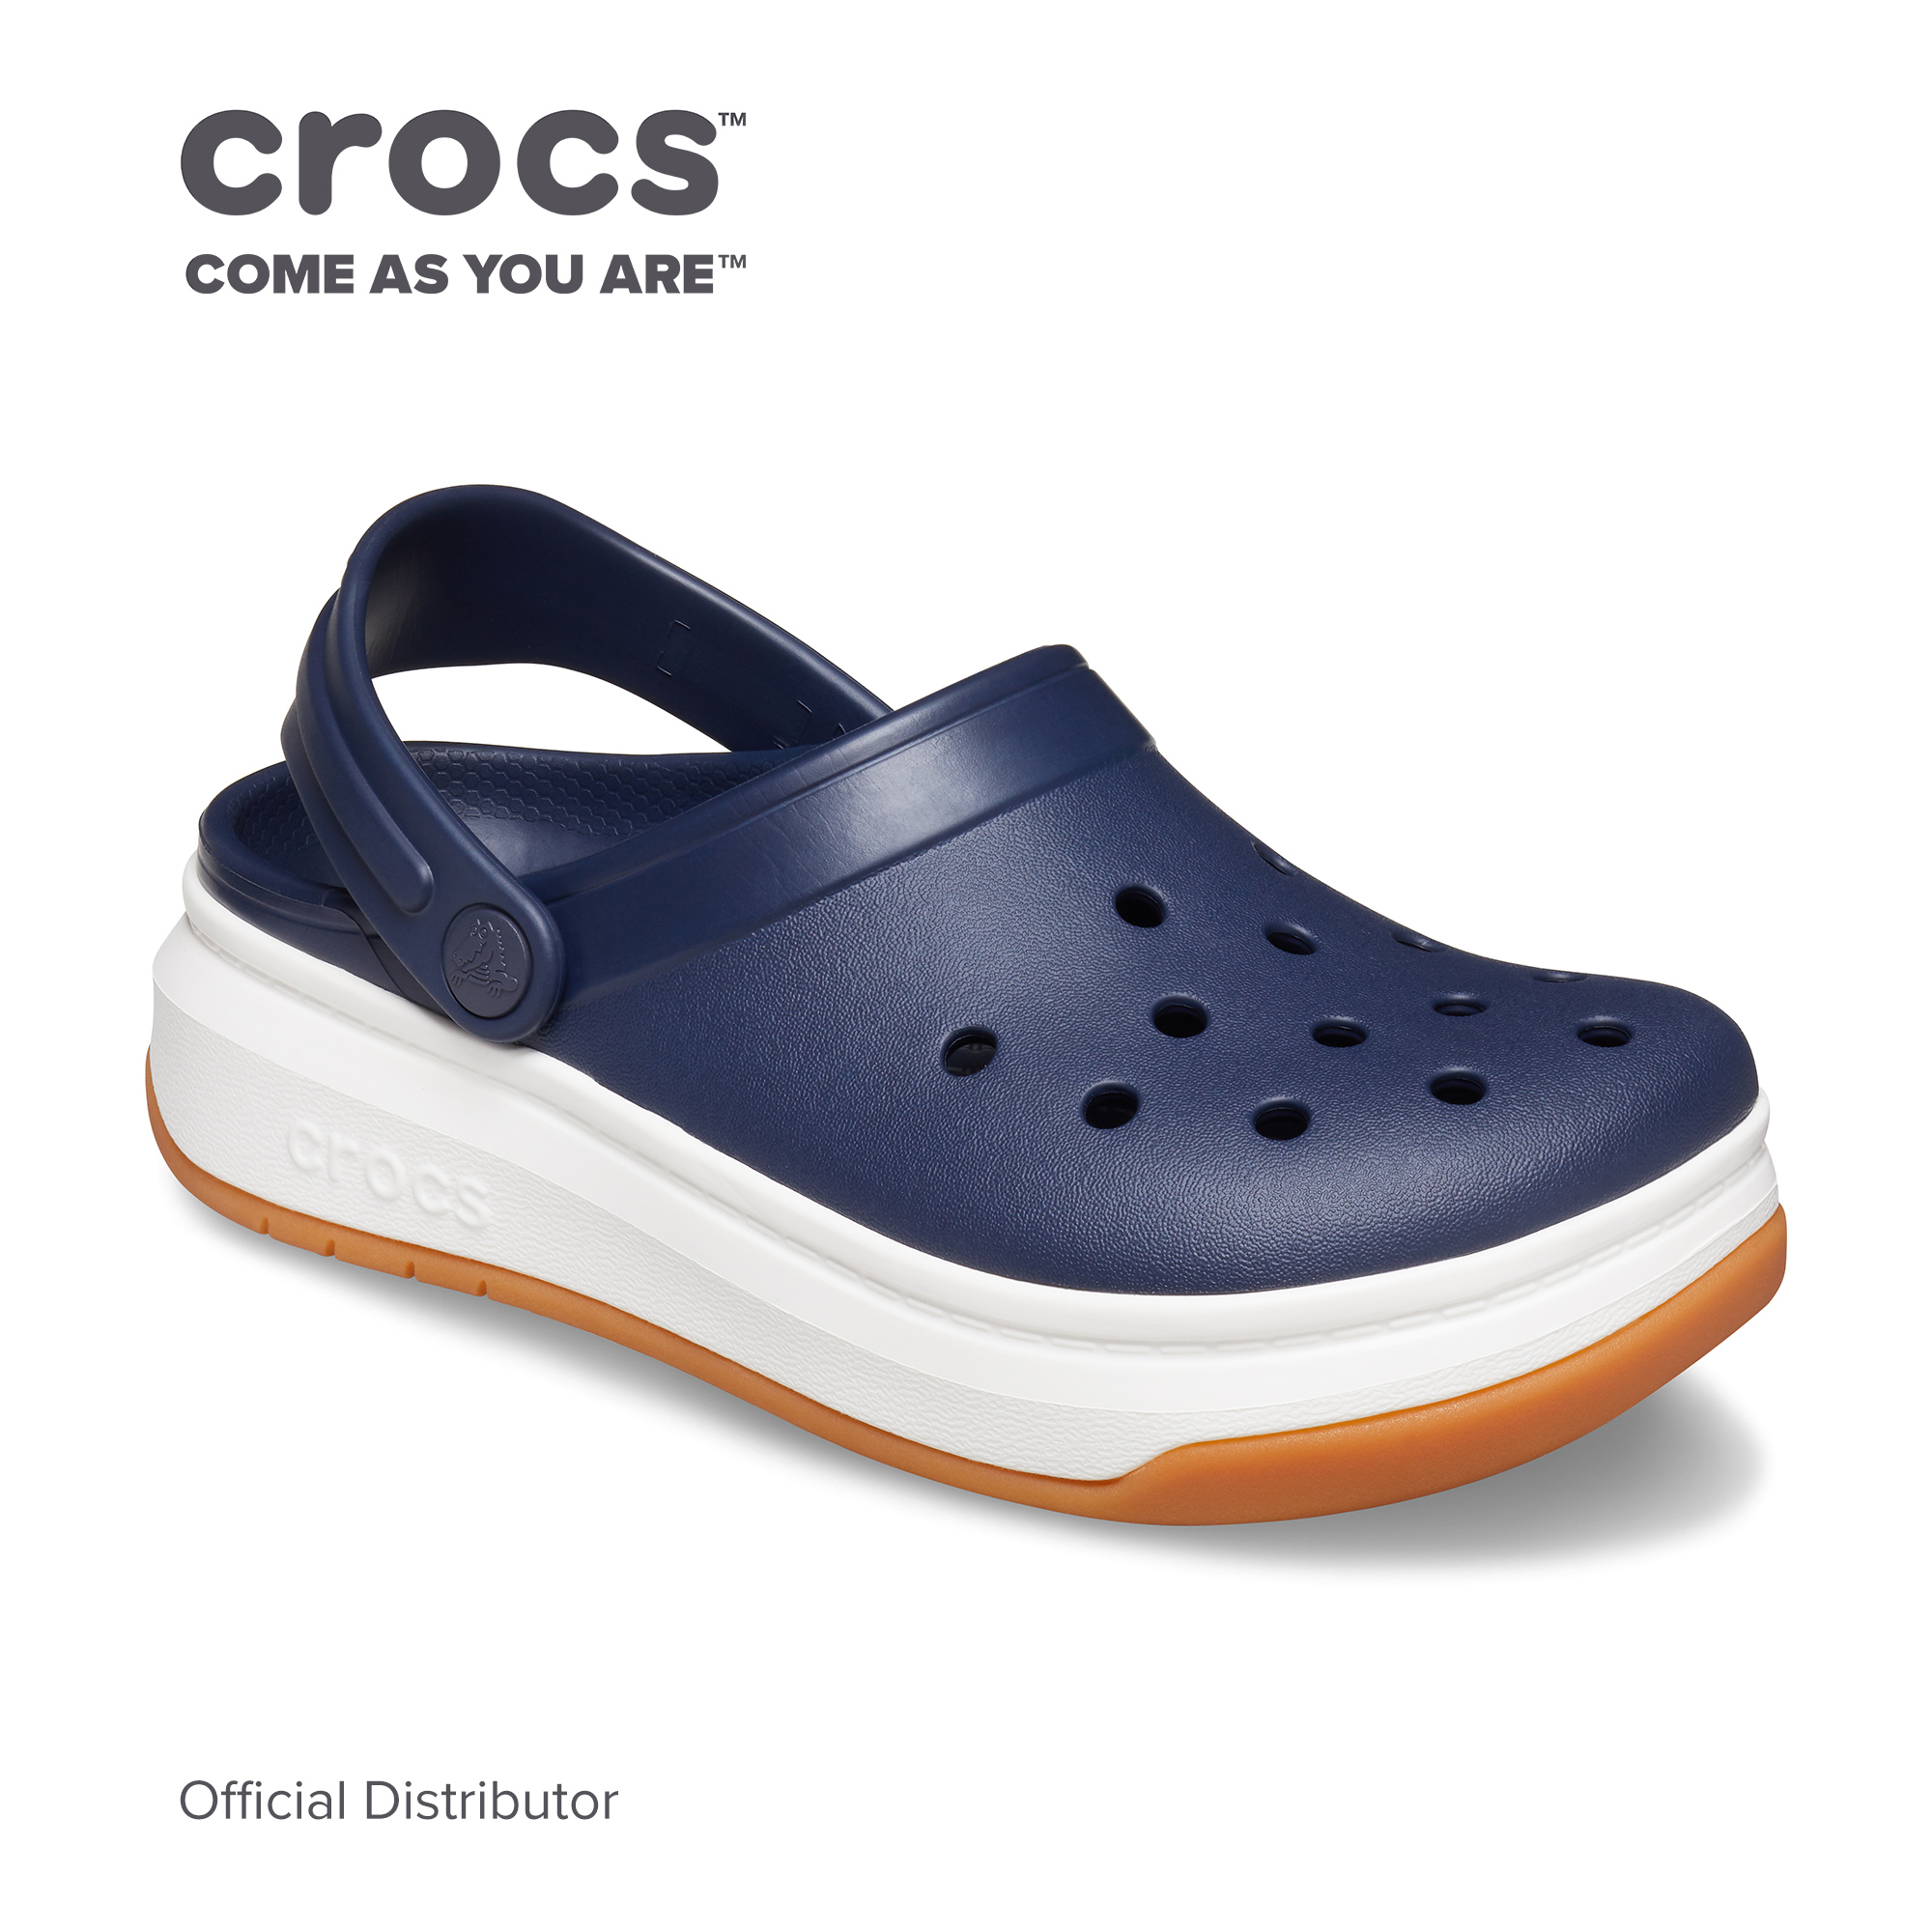 crocs price shoes